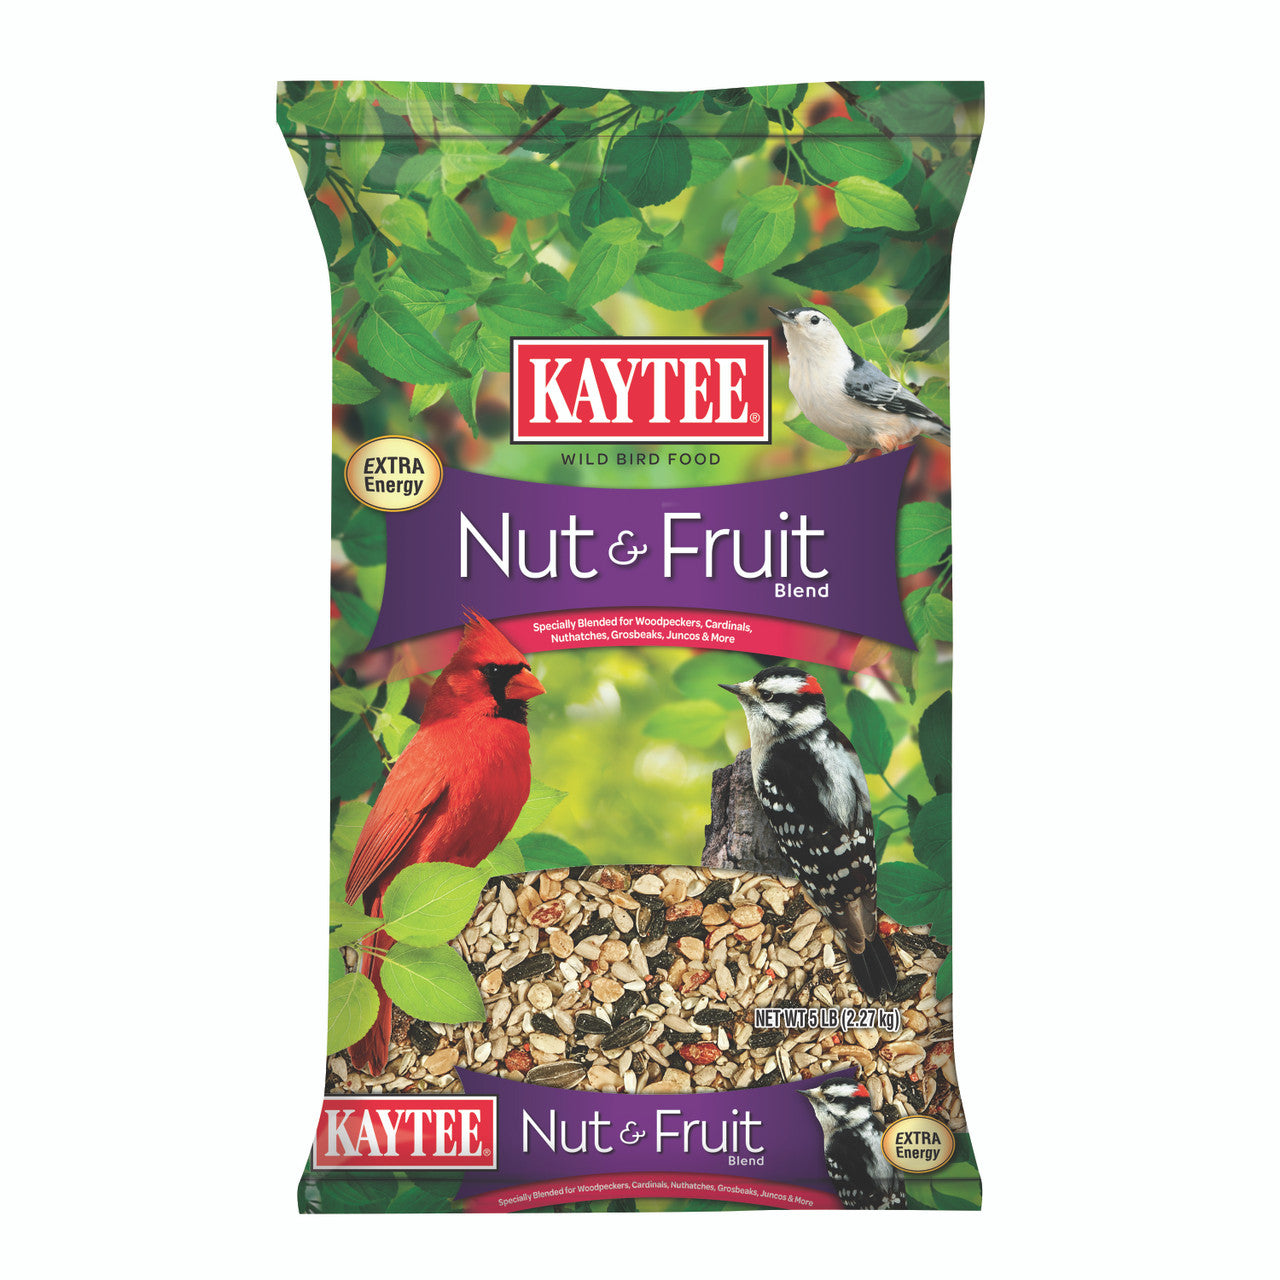 Kaytee Wild Bird Food Nut & Fruit Blend, 5 Pounds